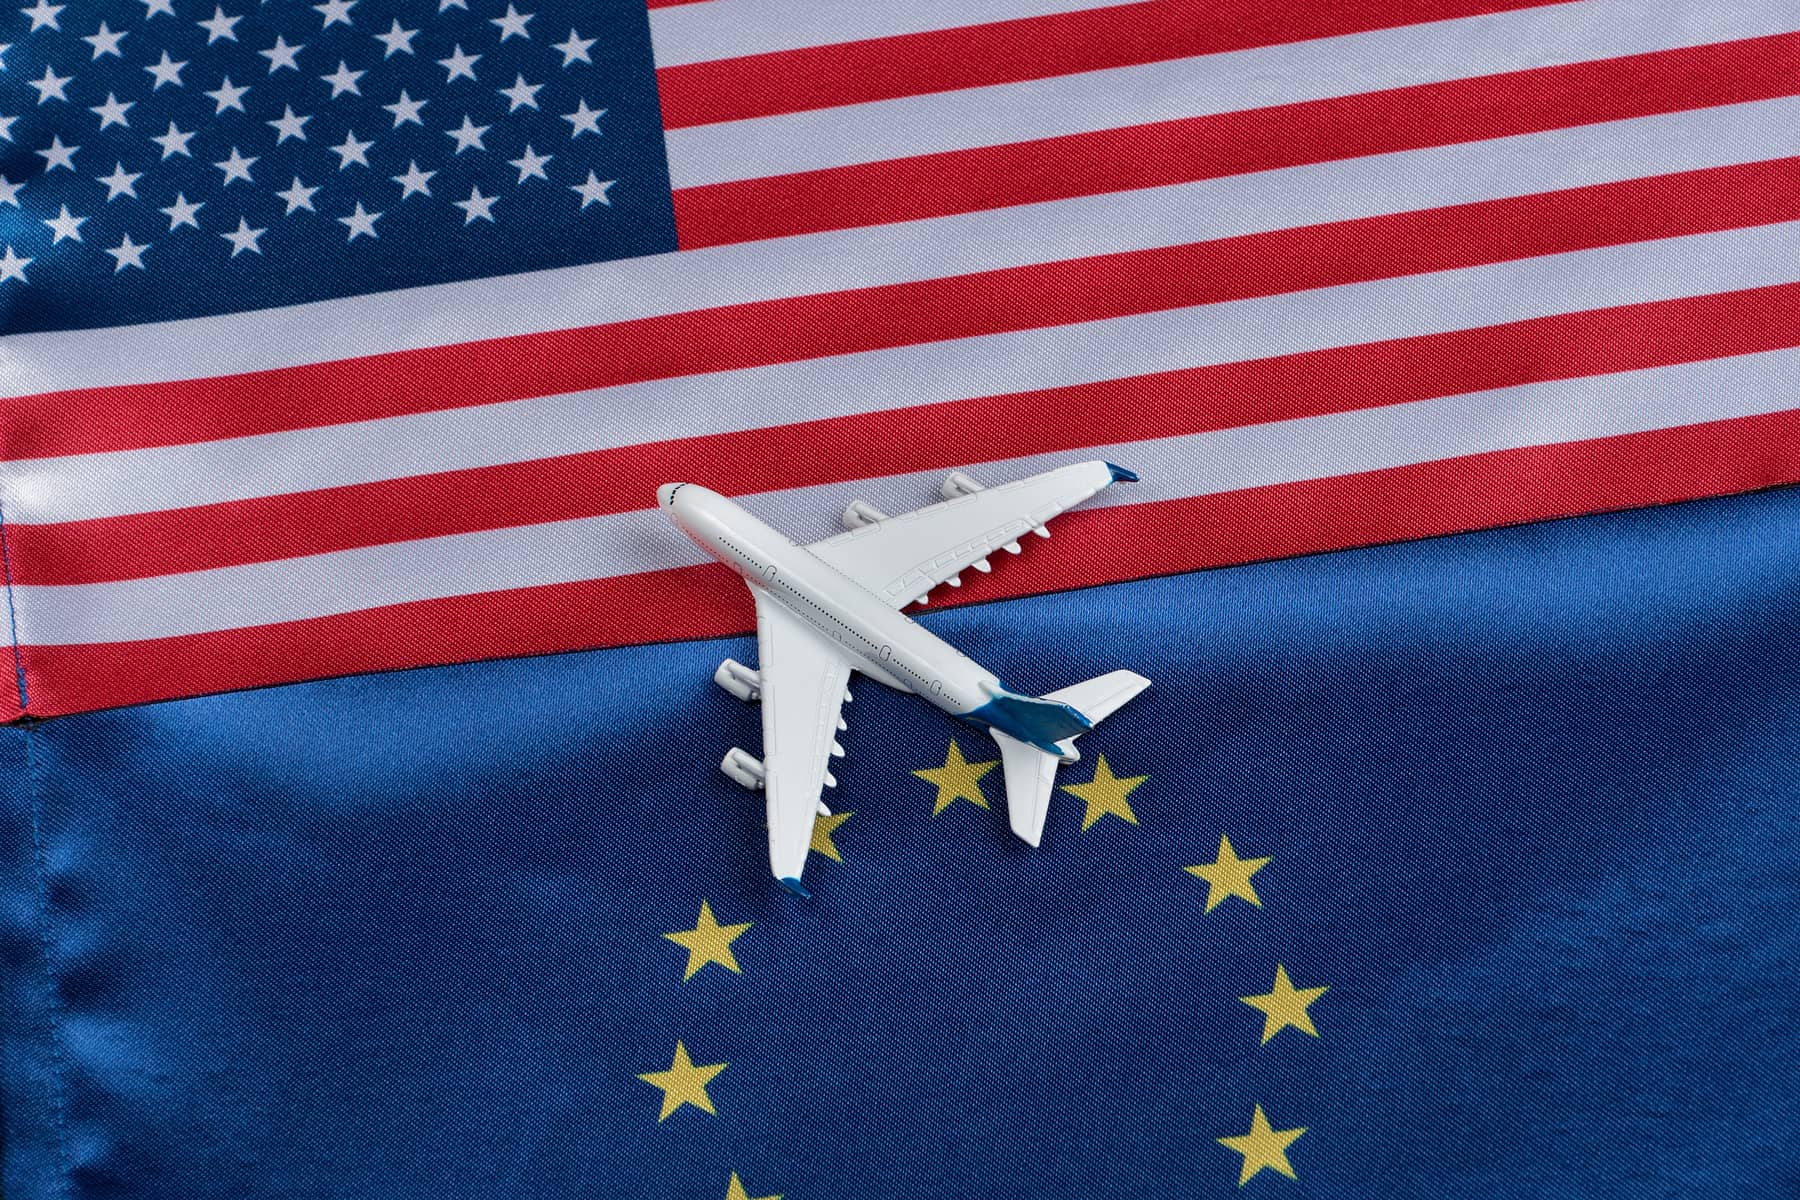 estadounidenses necesitaran permiso para viajar a europa